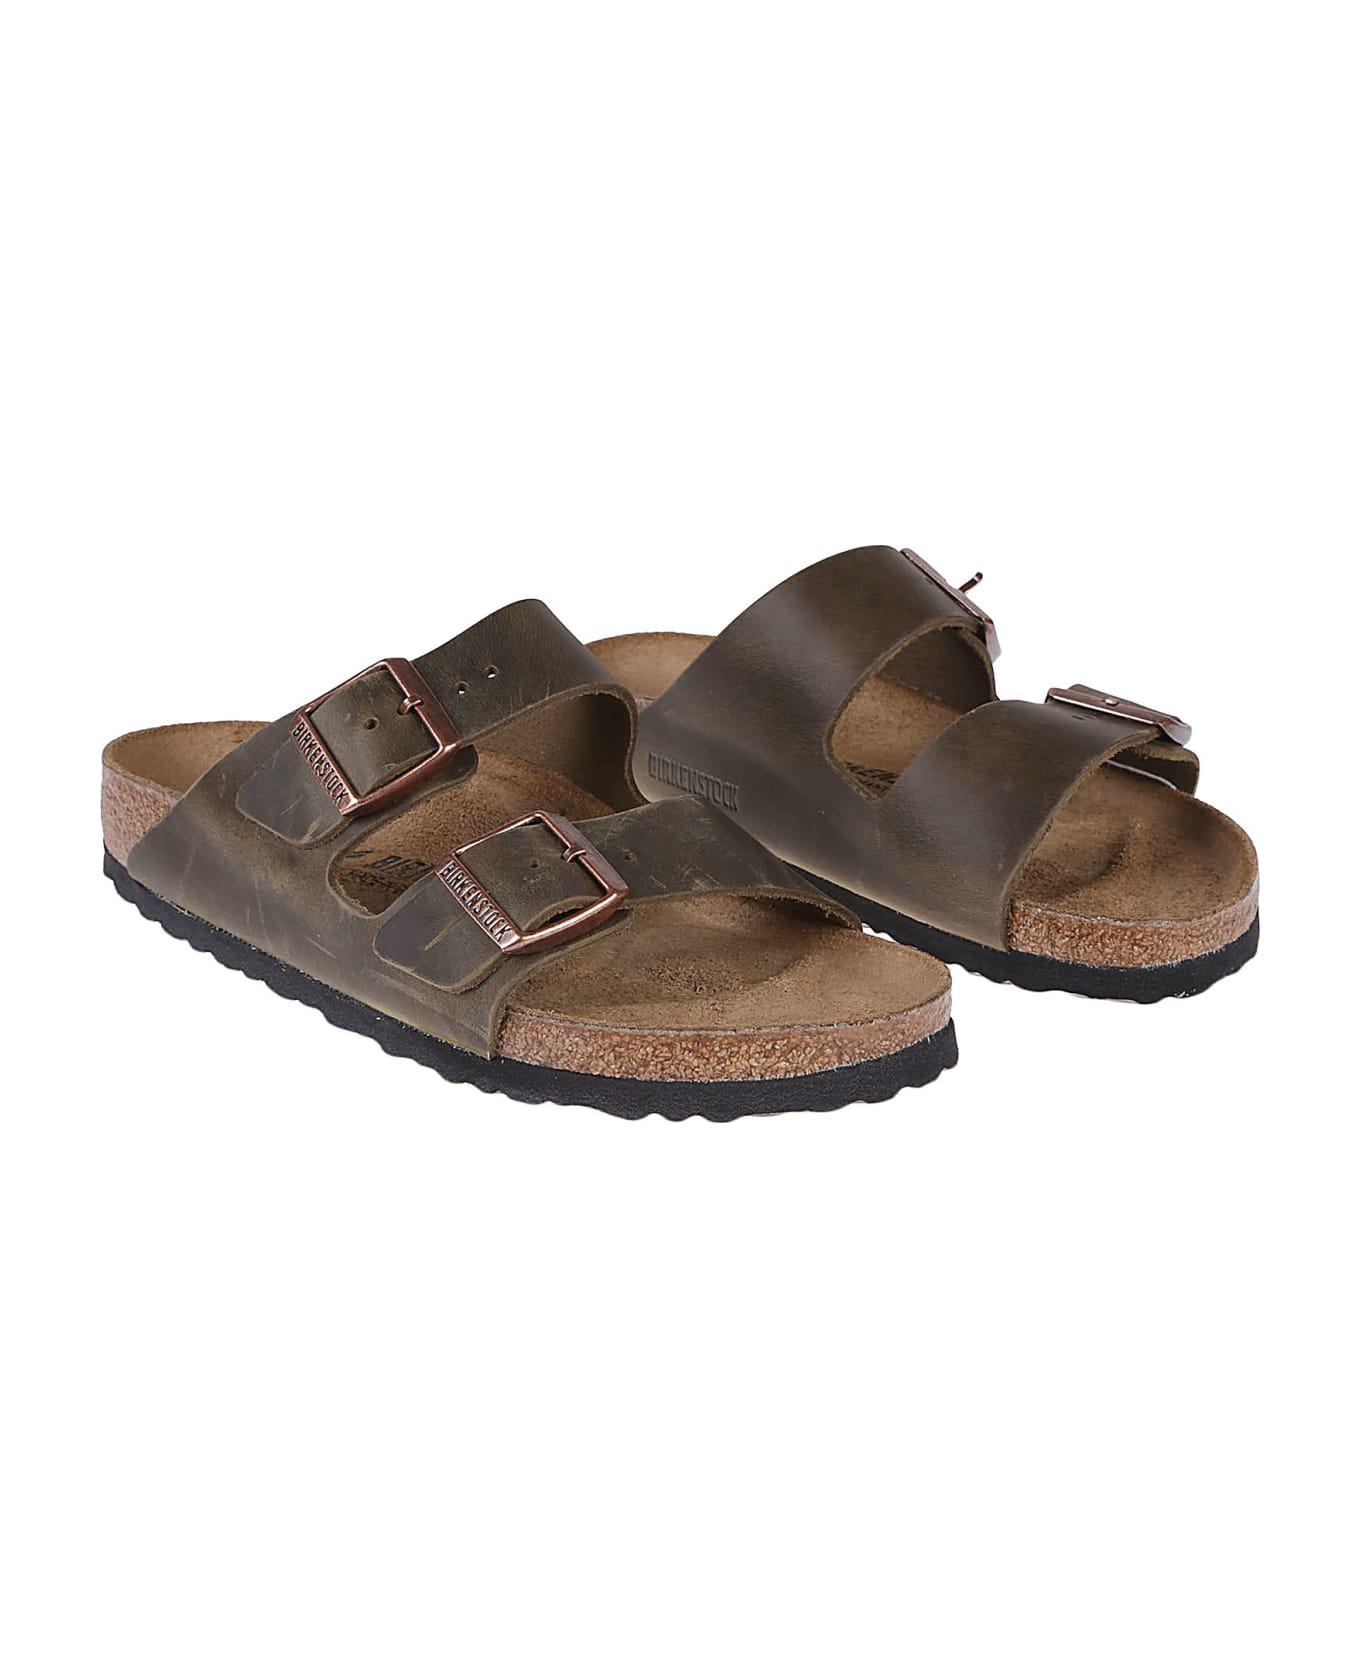 Birkenstock Arizona Sandals - Faded Khaki サンダル